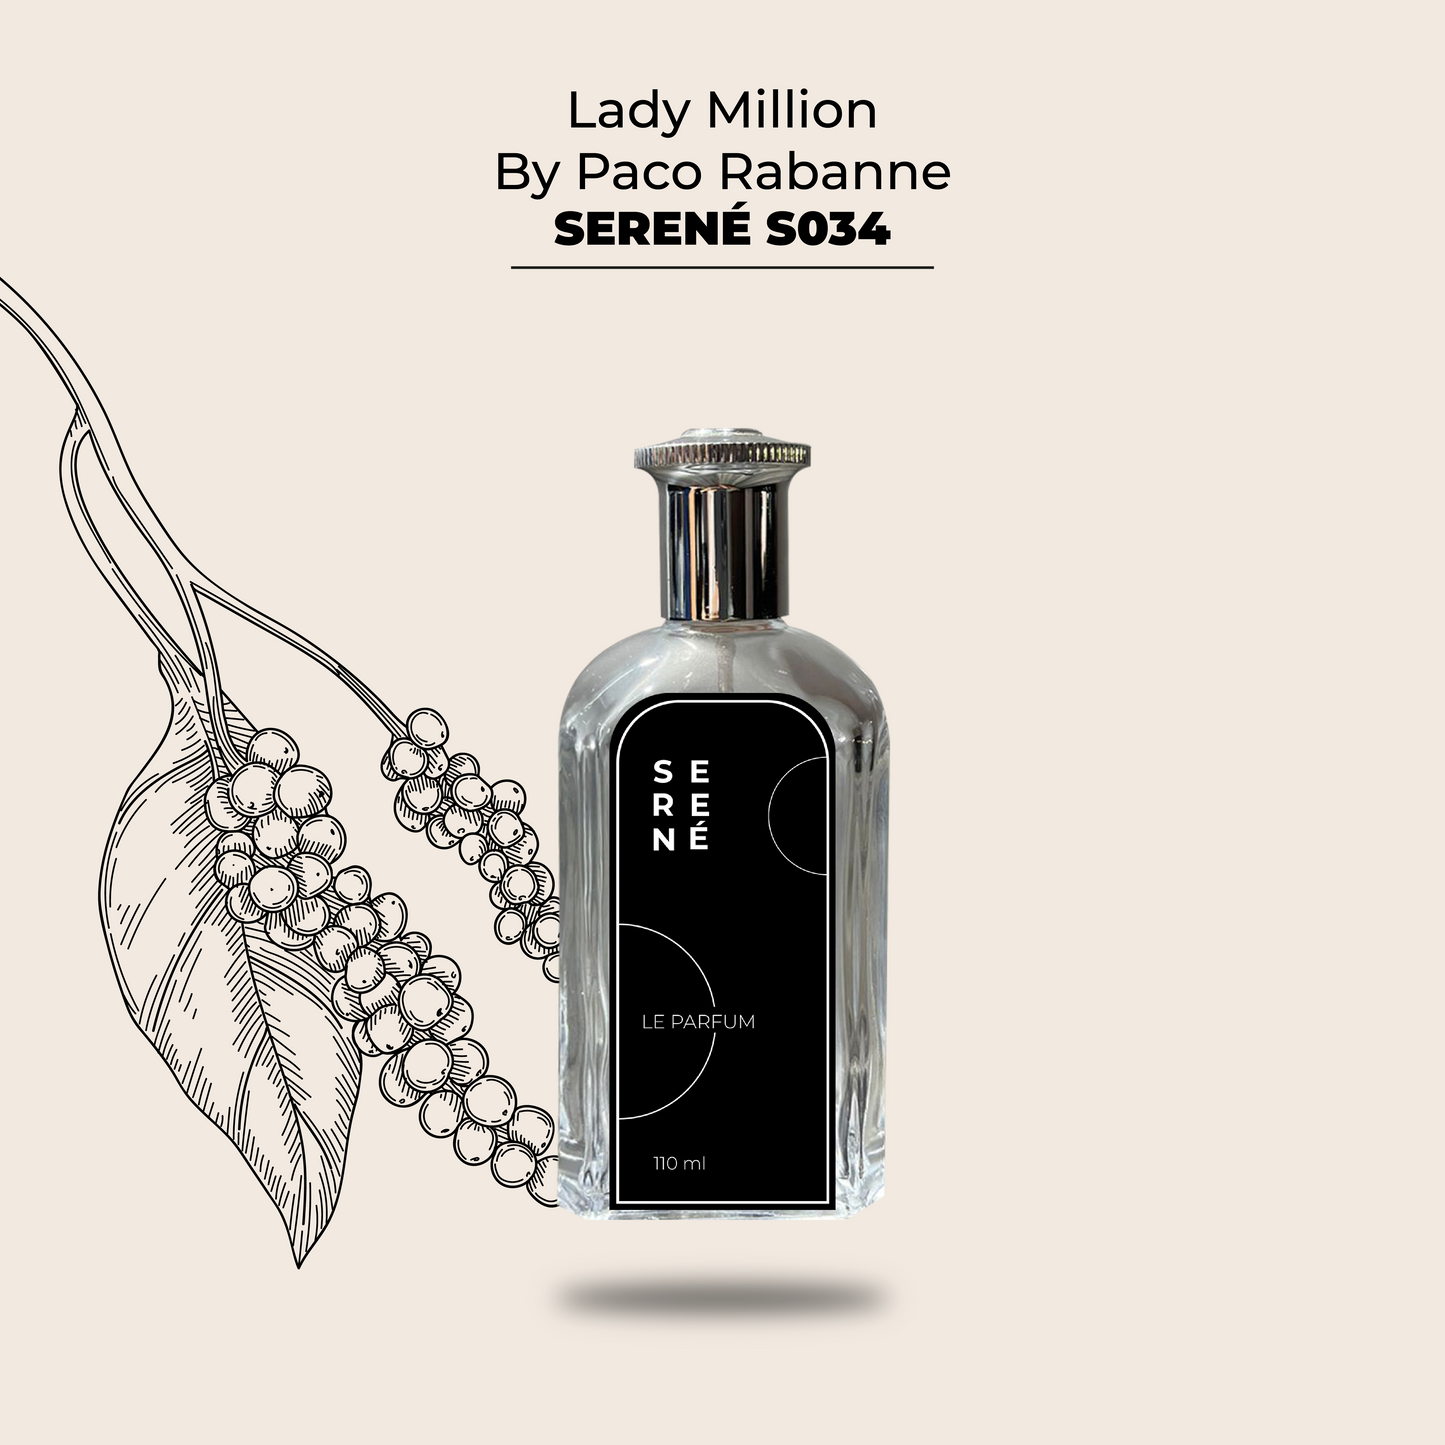 Serené Le Parfum S234 - Inspirada en Lady Million por Paco Rabanne